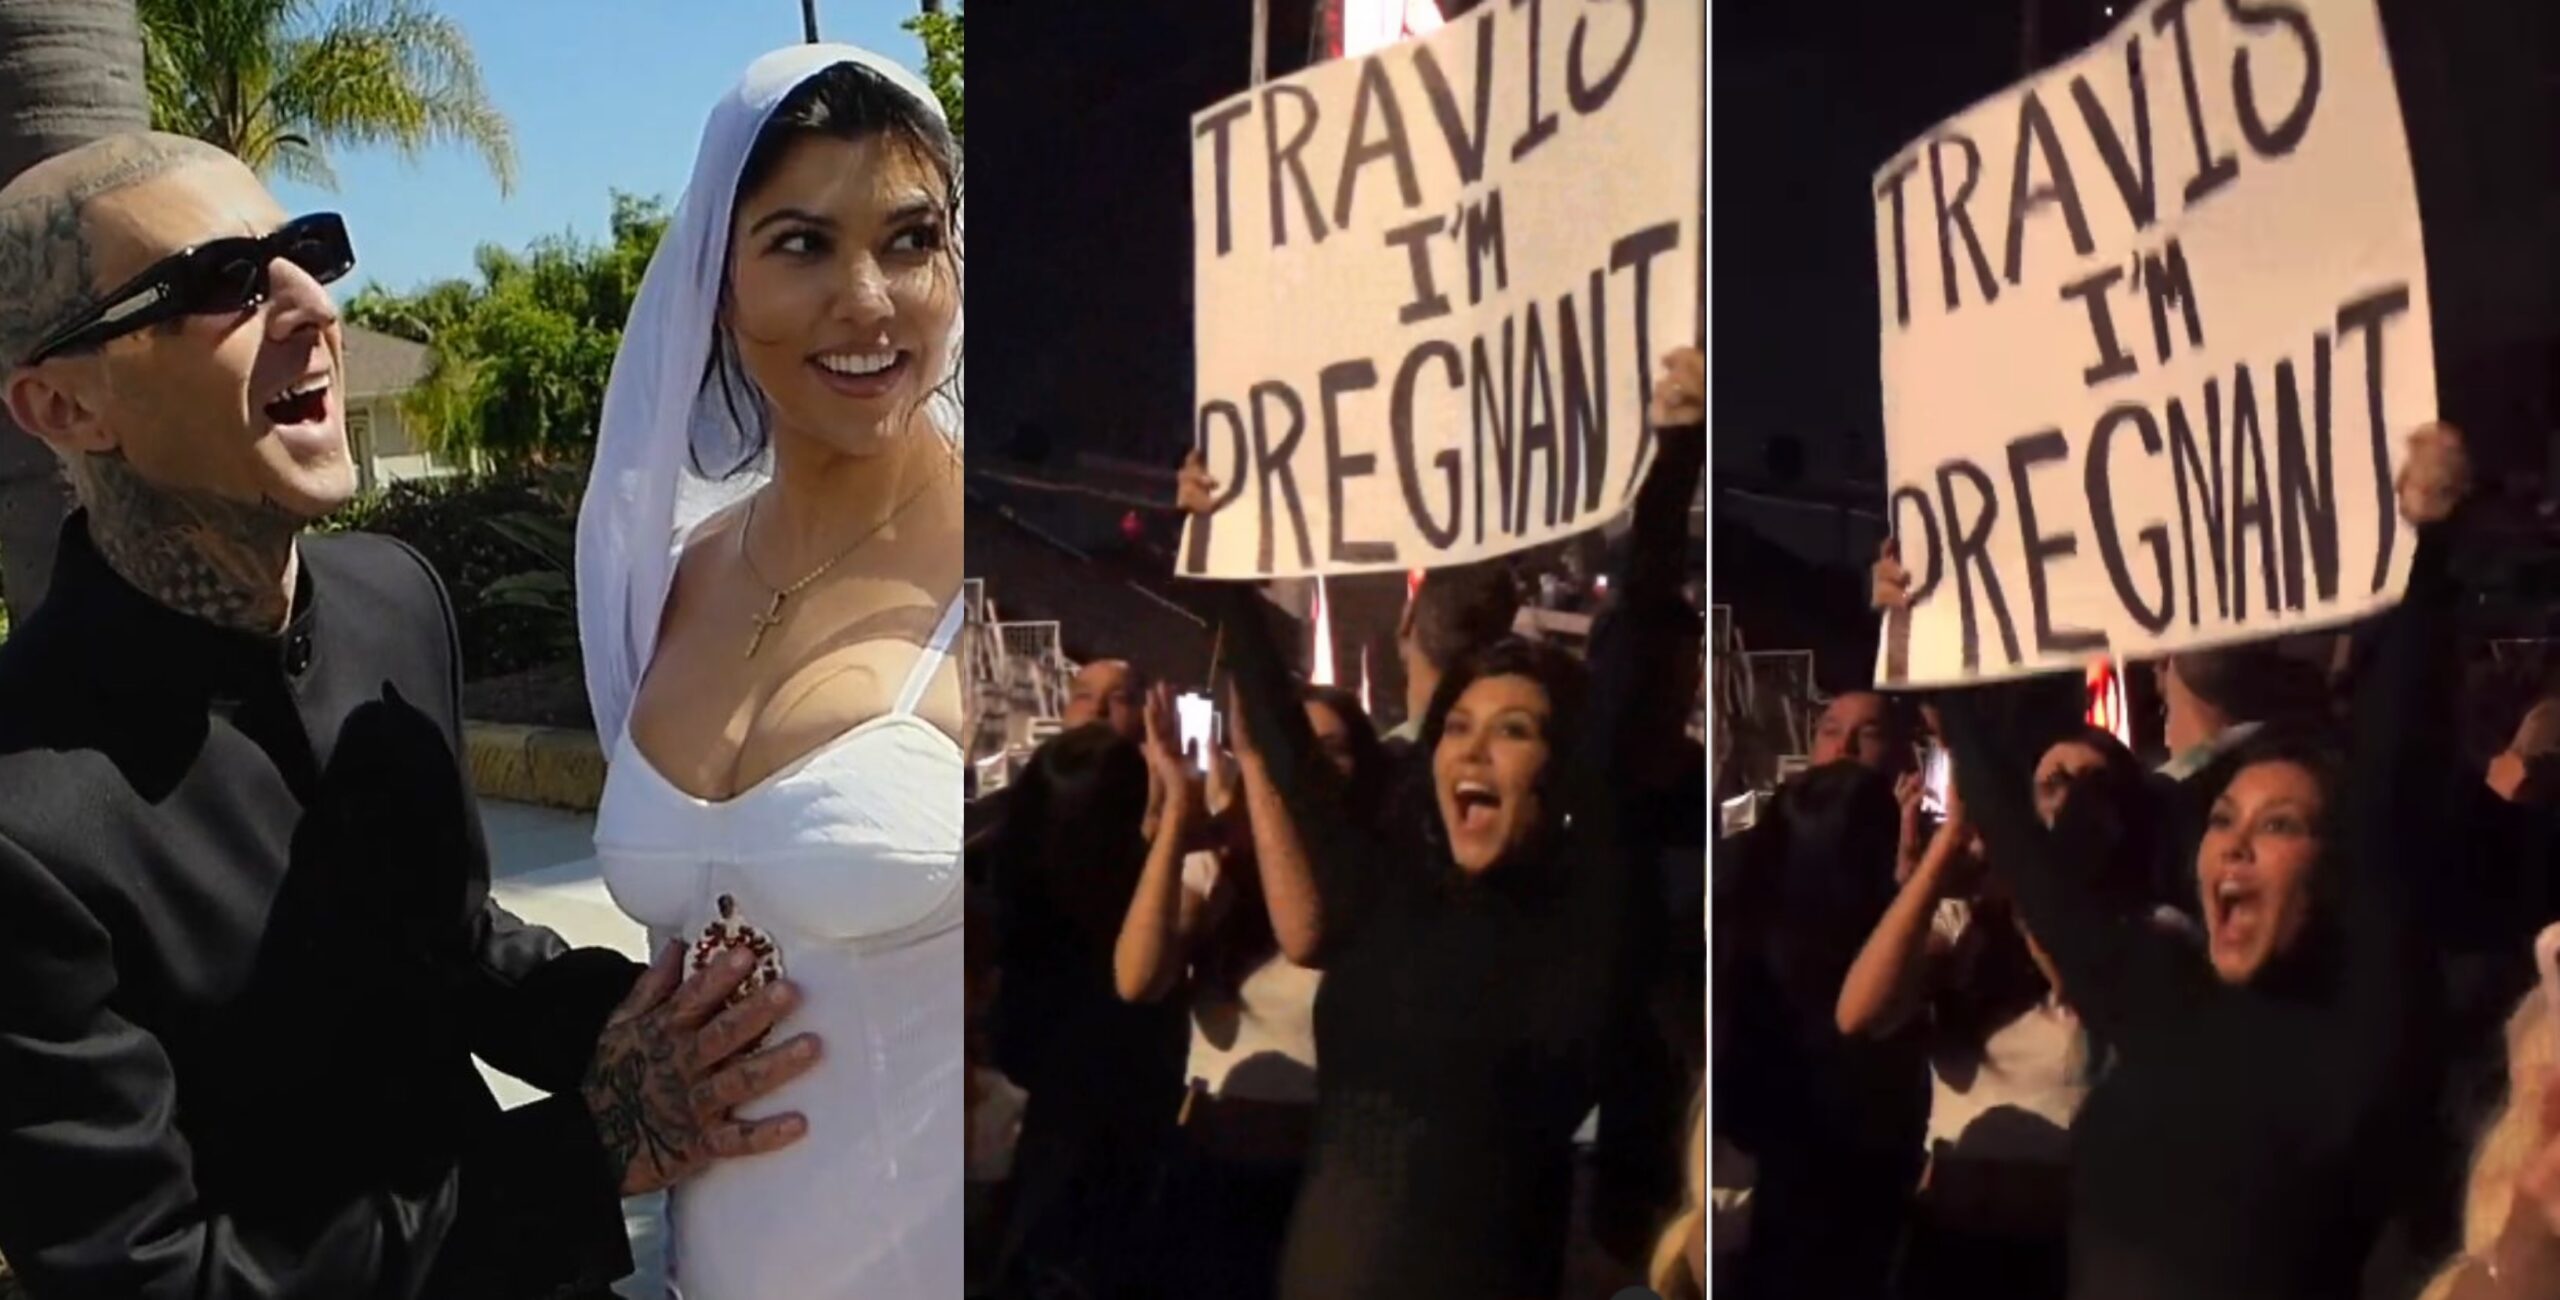 Kourtney Kardashian makes Pregnancy announcement to Travis barker During a concert (Video)